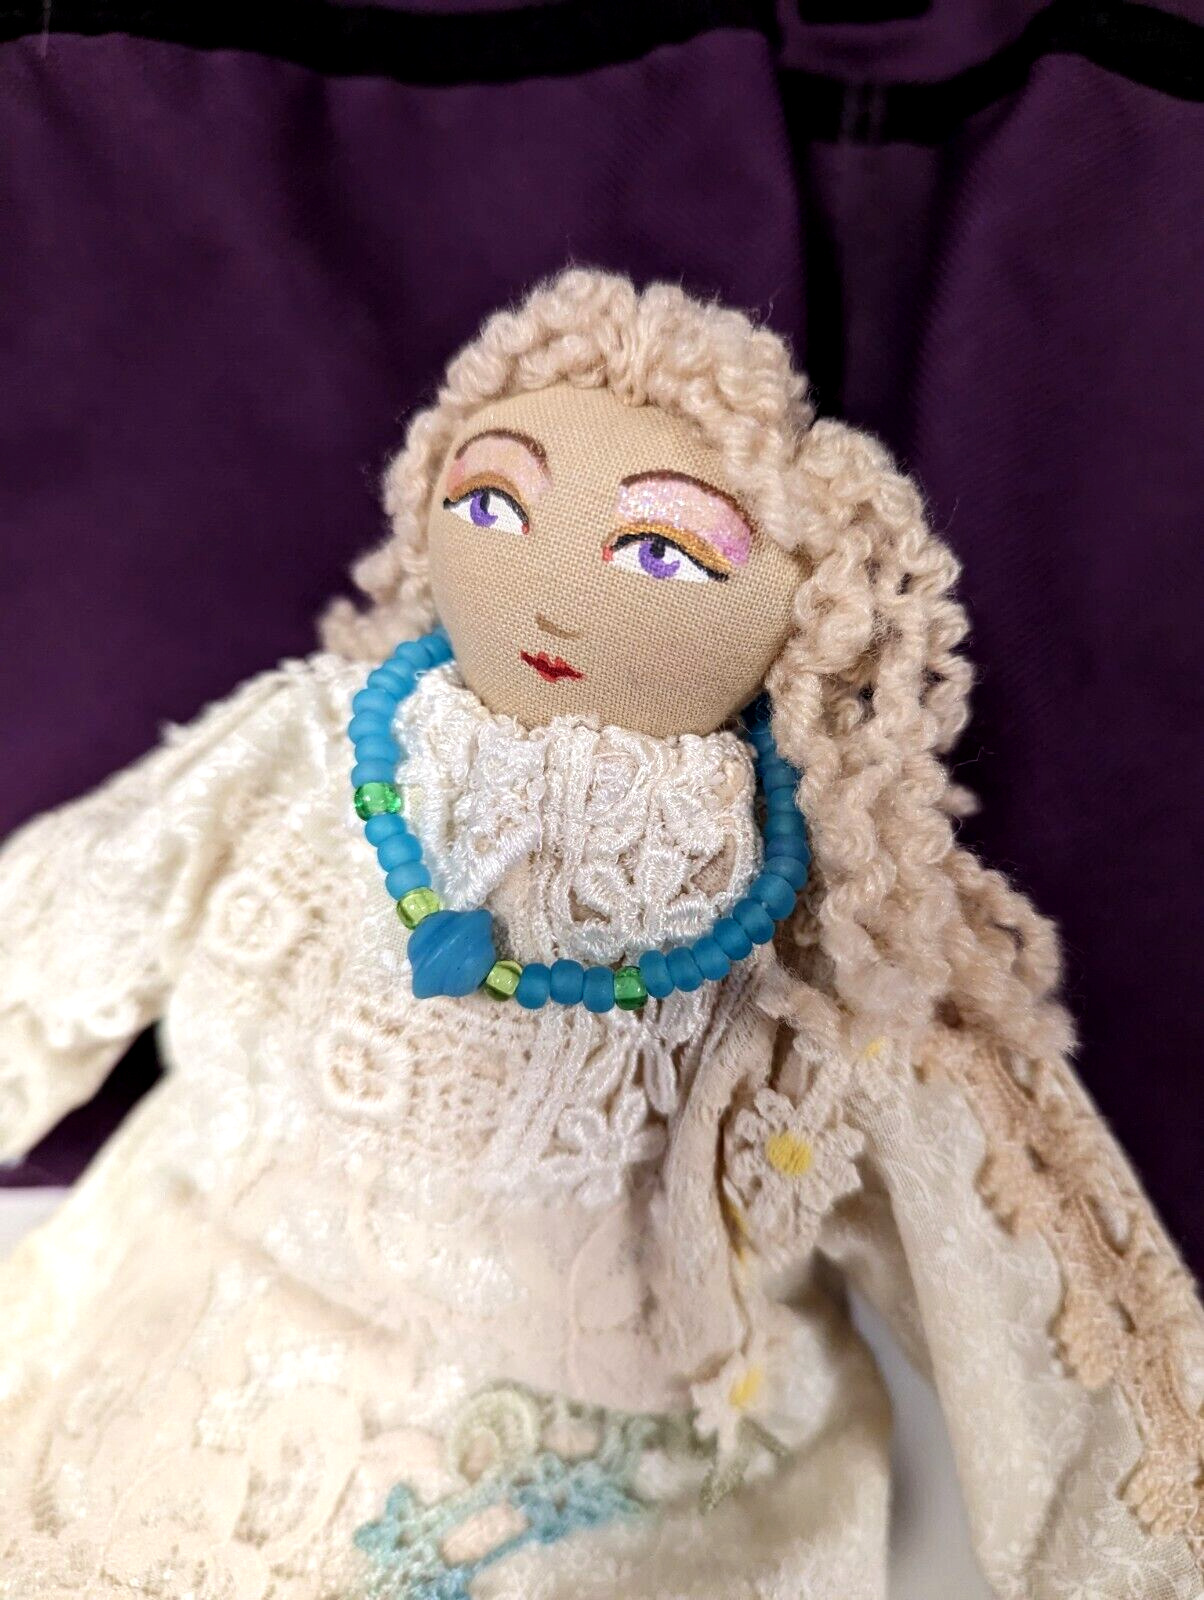 Theresas Dolls Cloth Folk Art Homemade Doll Soft Goddess Cottagecore 11 inches